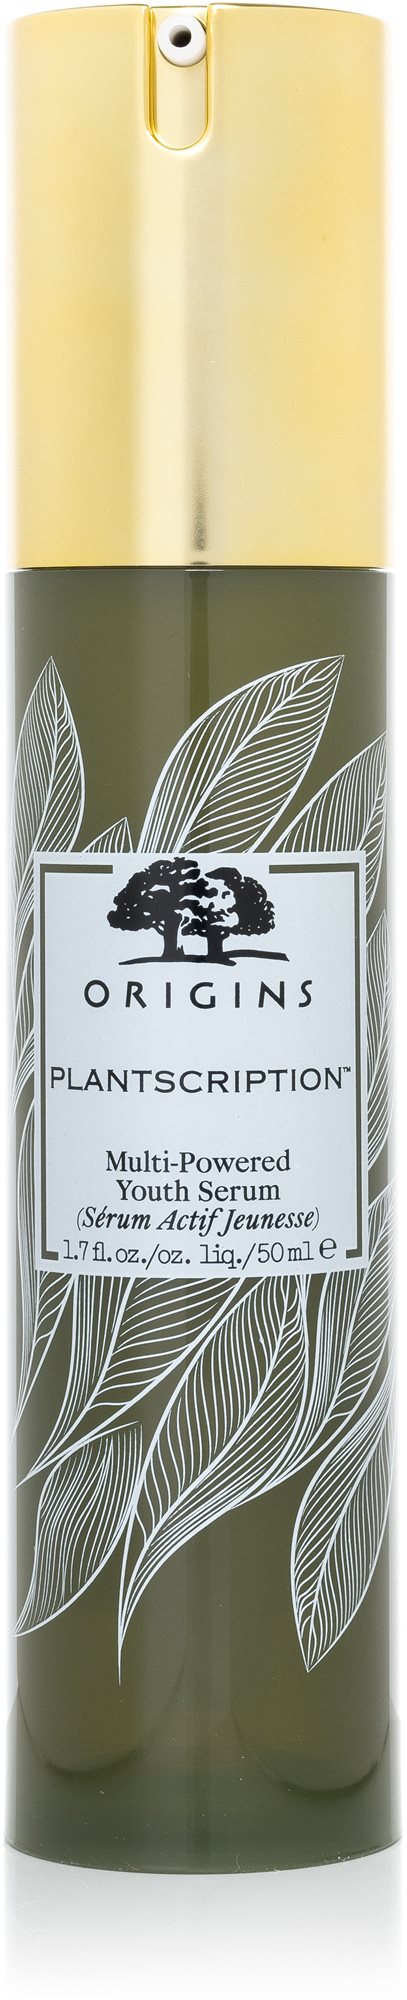 ORIGINS Plantscription Multi-Powered Youth Serum 50 ml